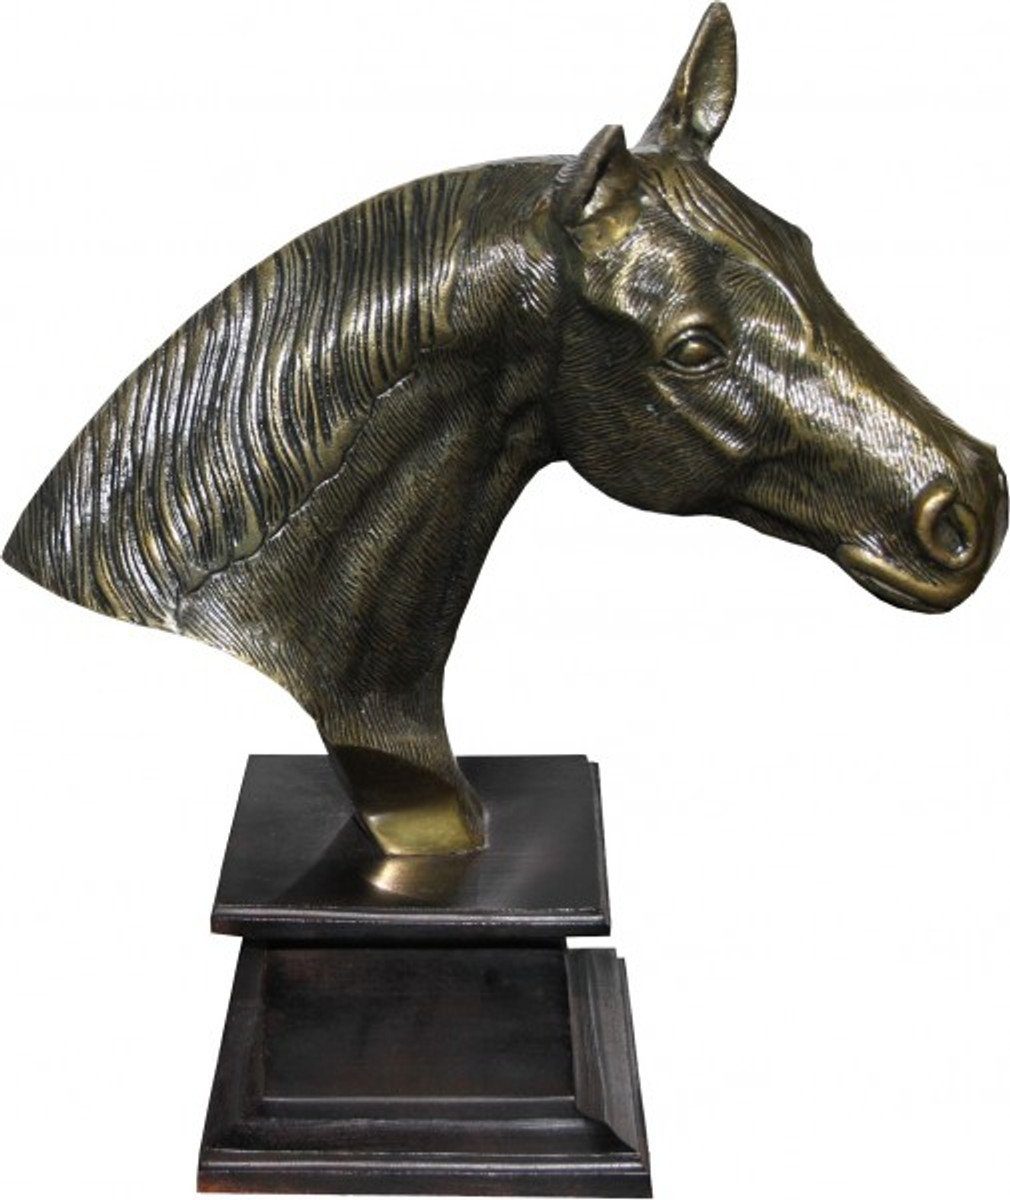 Figur Tier Gold/Braun Holzsockel Antik Casa Padrino - Skulptur 39 cm Luxus Dekoobjekt Pferd Statue H auf